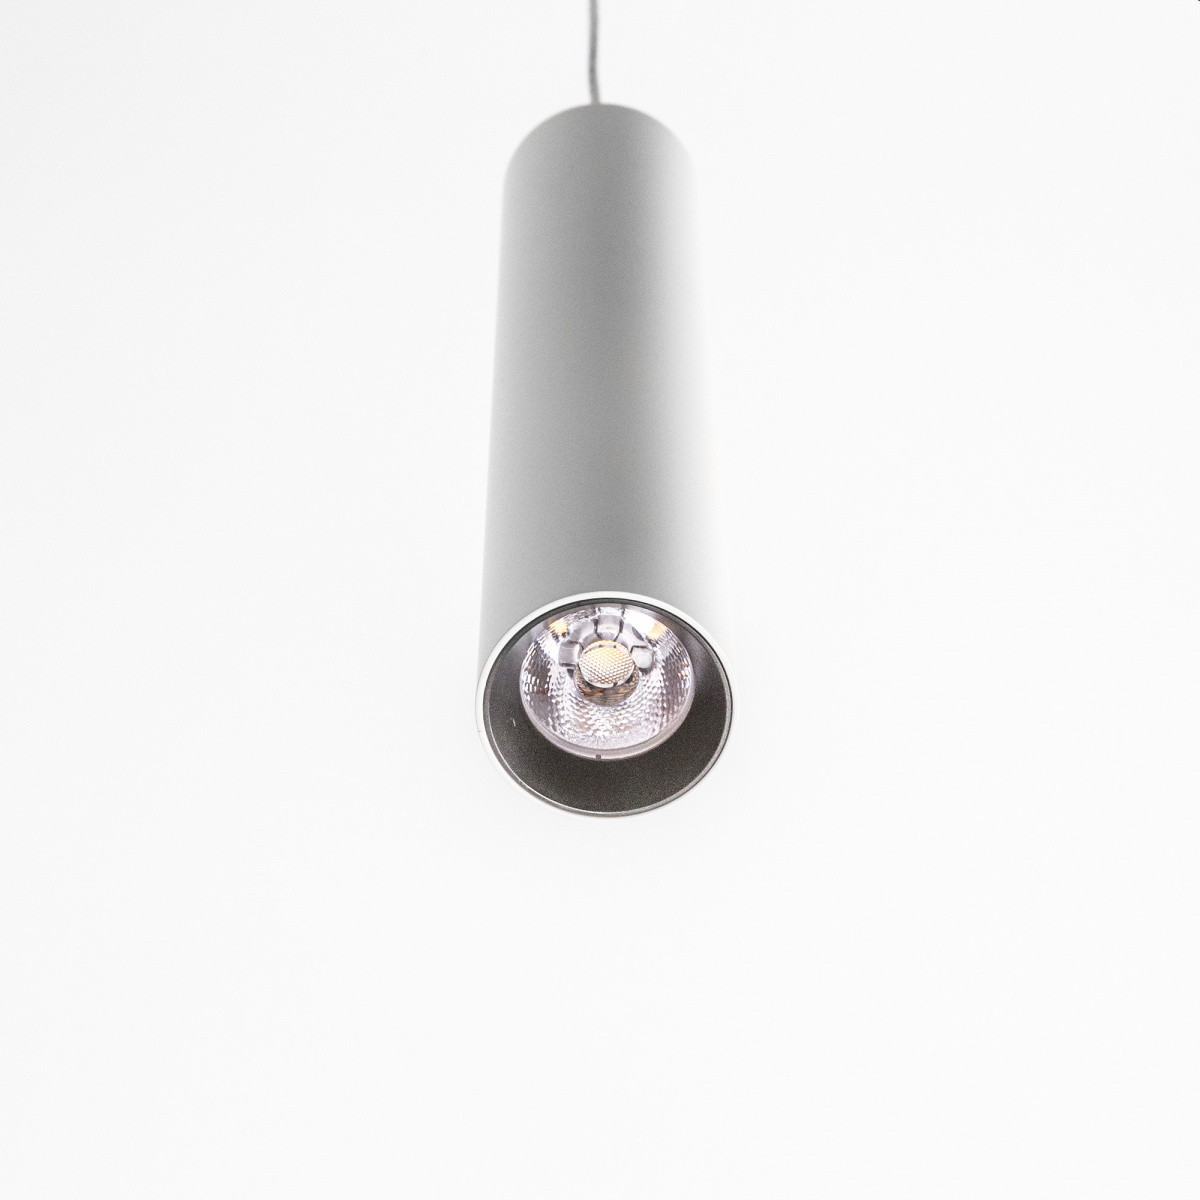 подвесной светильник citilux тубус (tubus), артикул CL01PB120N